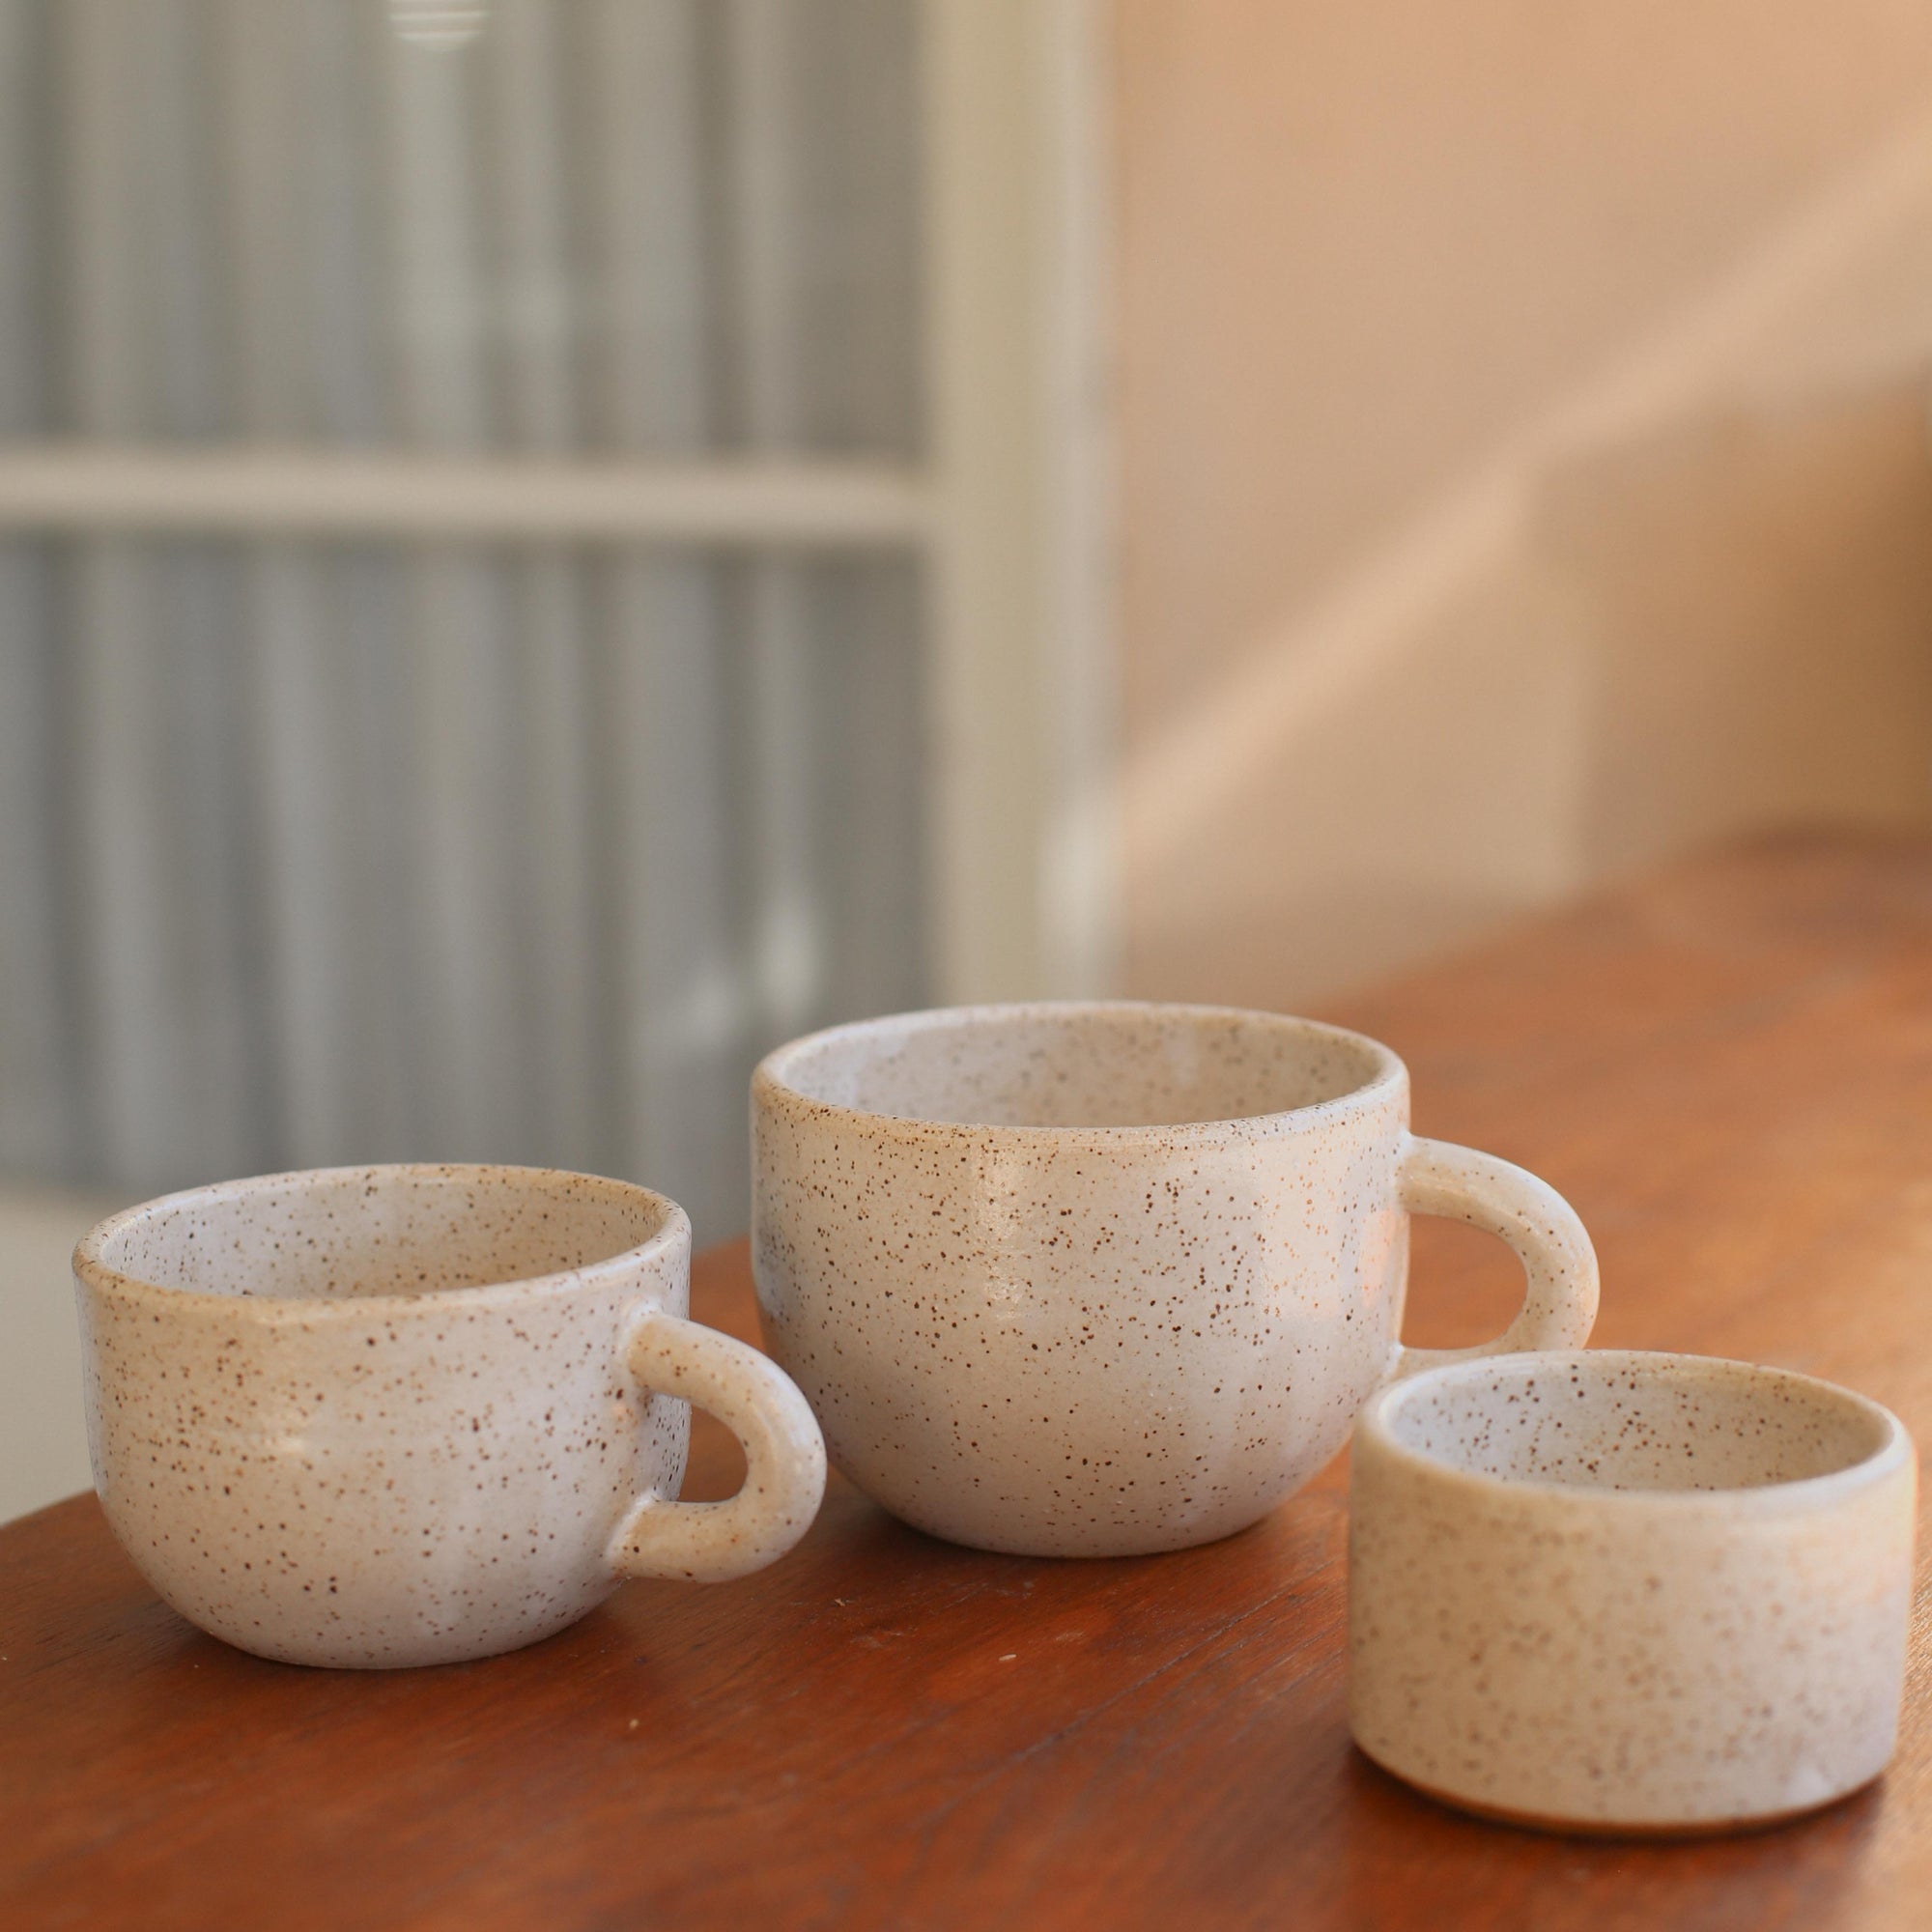 Daydream x Costa Mesa Ceramics Latte Mugs on wood table